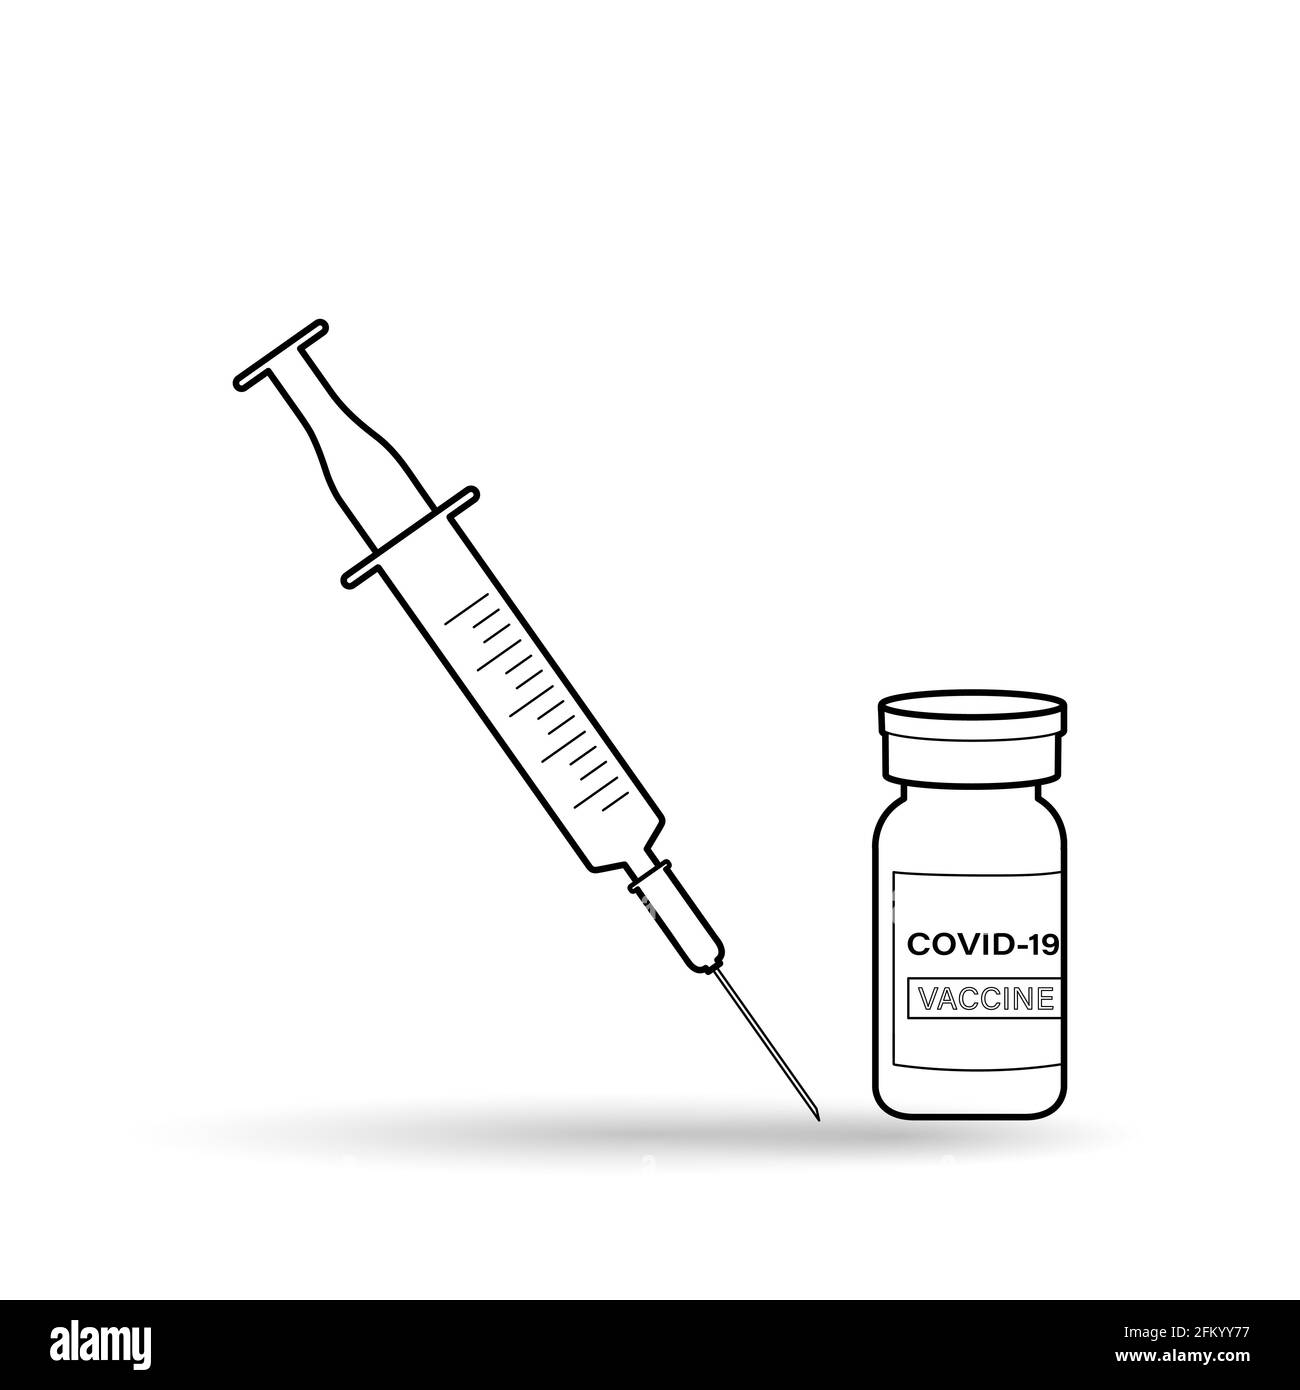 Syringe Needle Bottle Outline Icon Coronavirus Stock Vector (Royalty Free)  2003821040